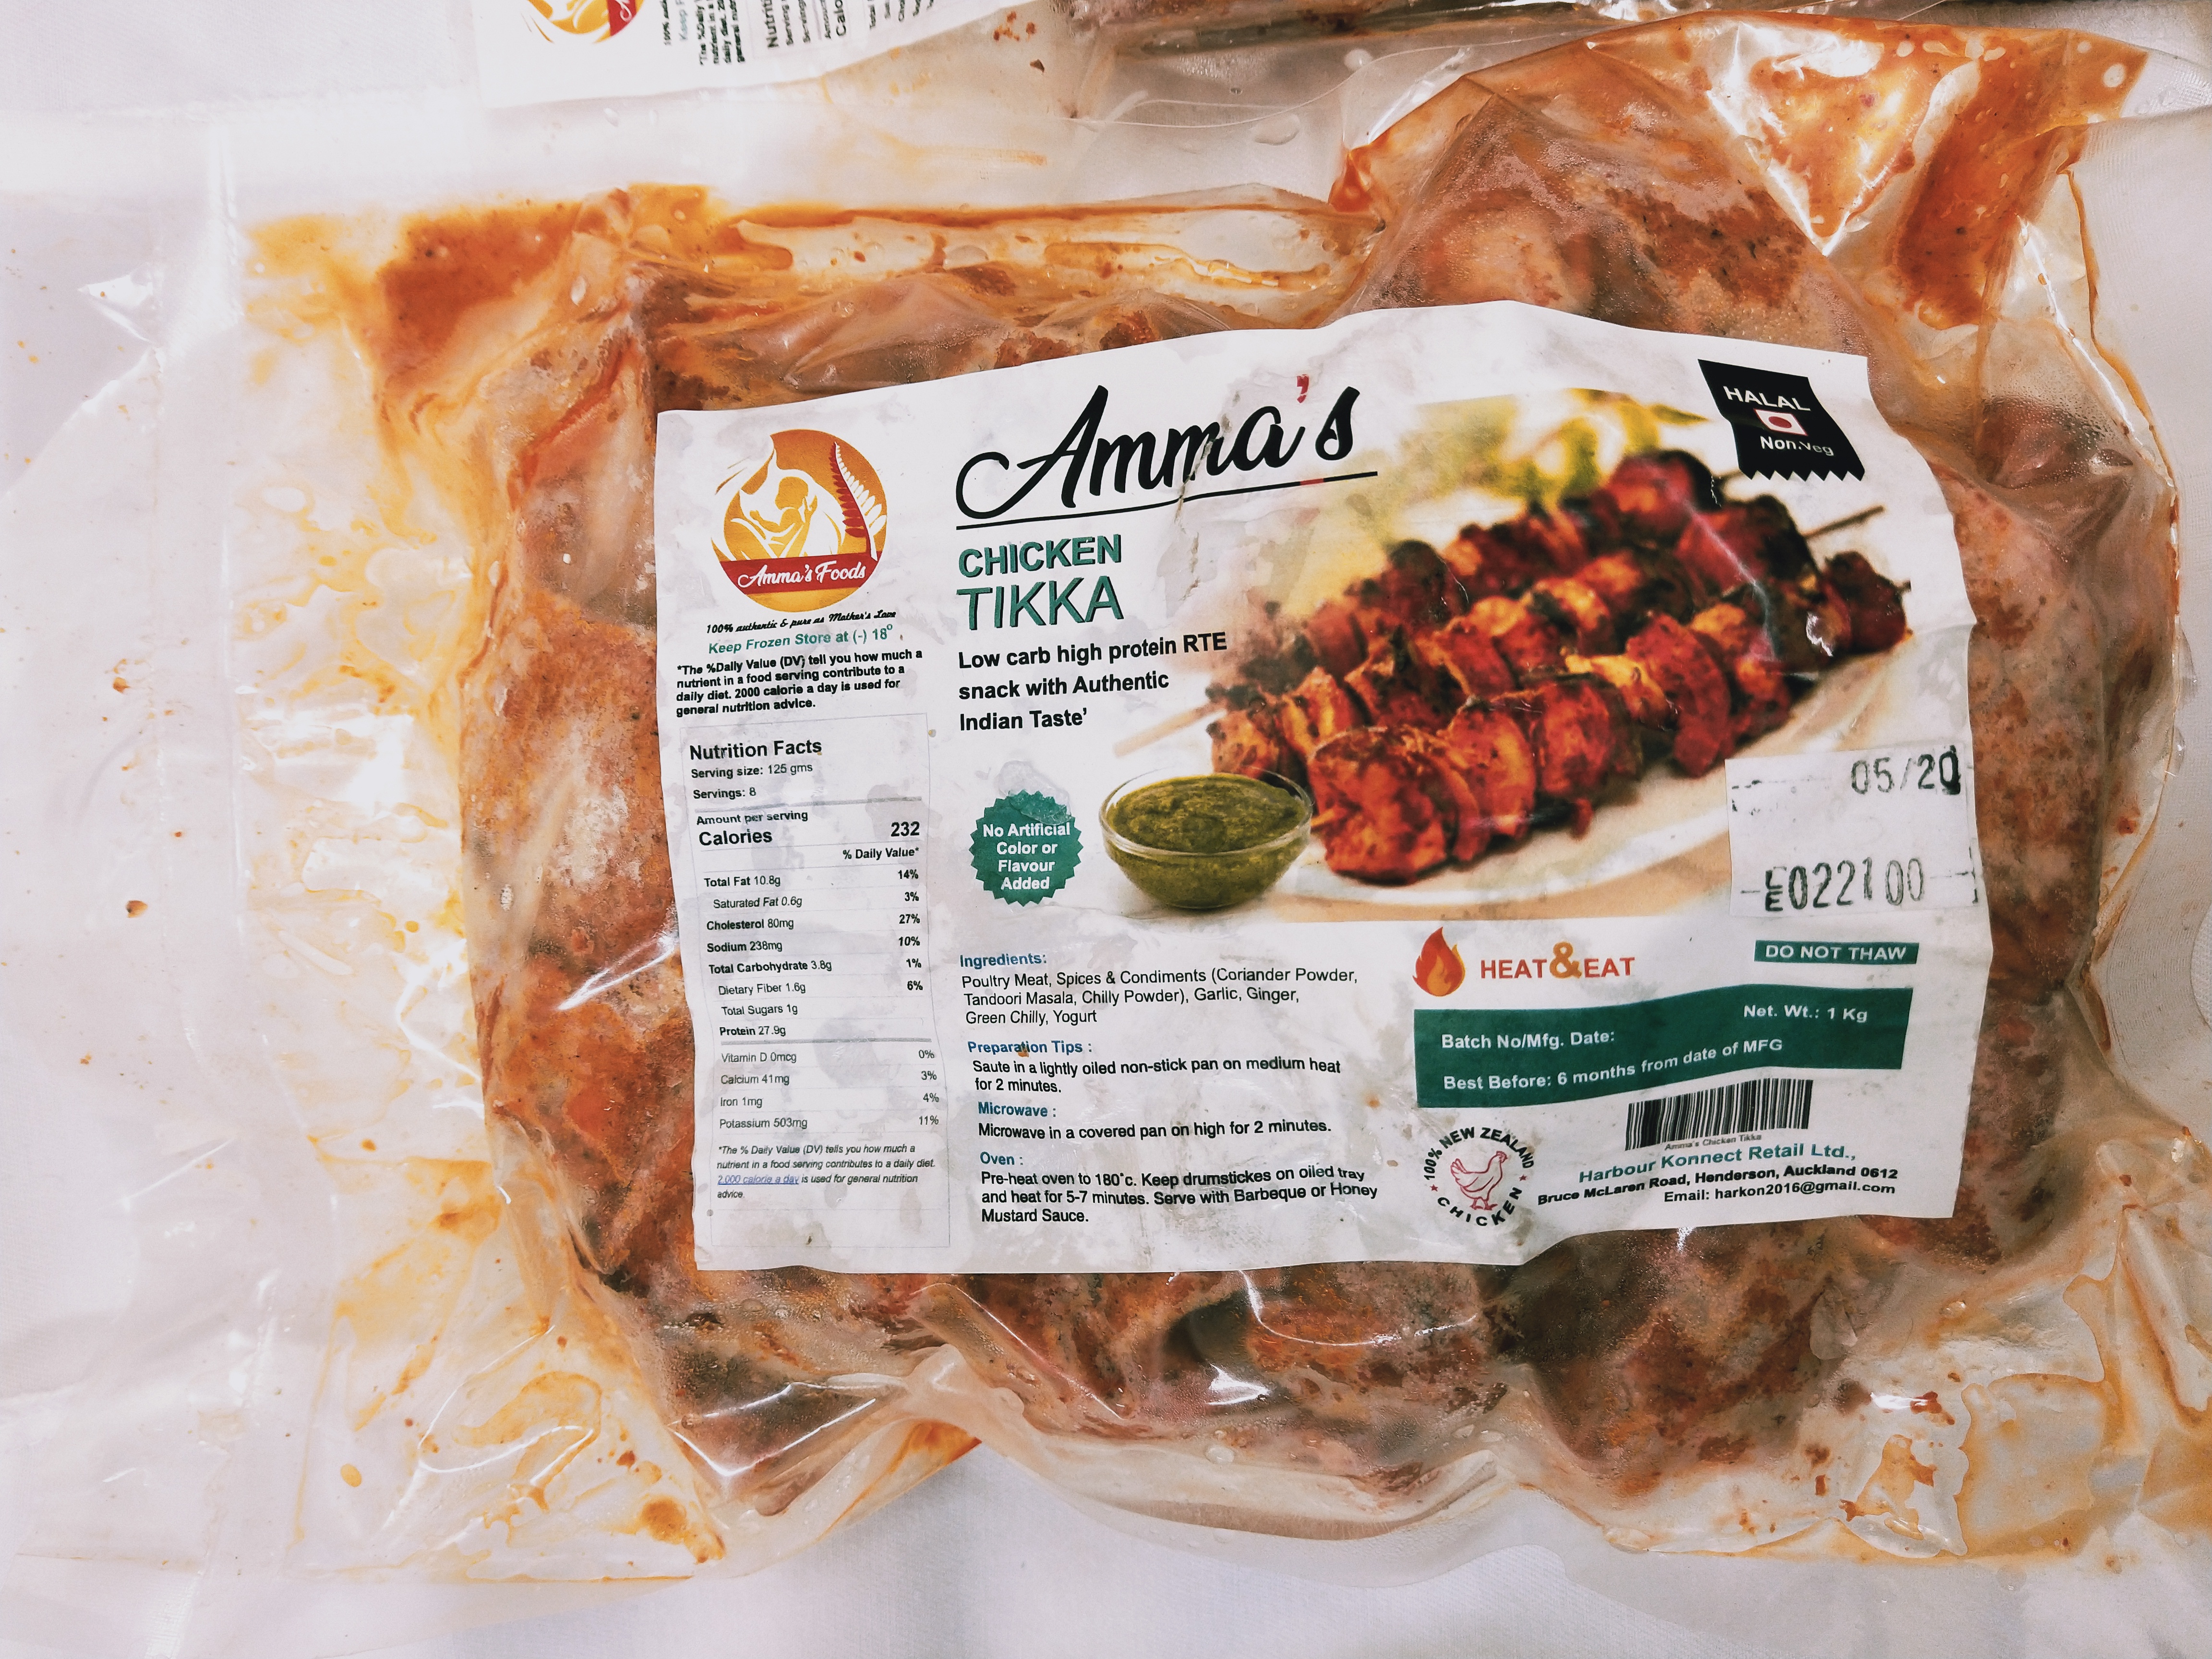 Pack of Amma’s Chicken Tikka Heat&Eat (1kg)